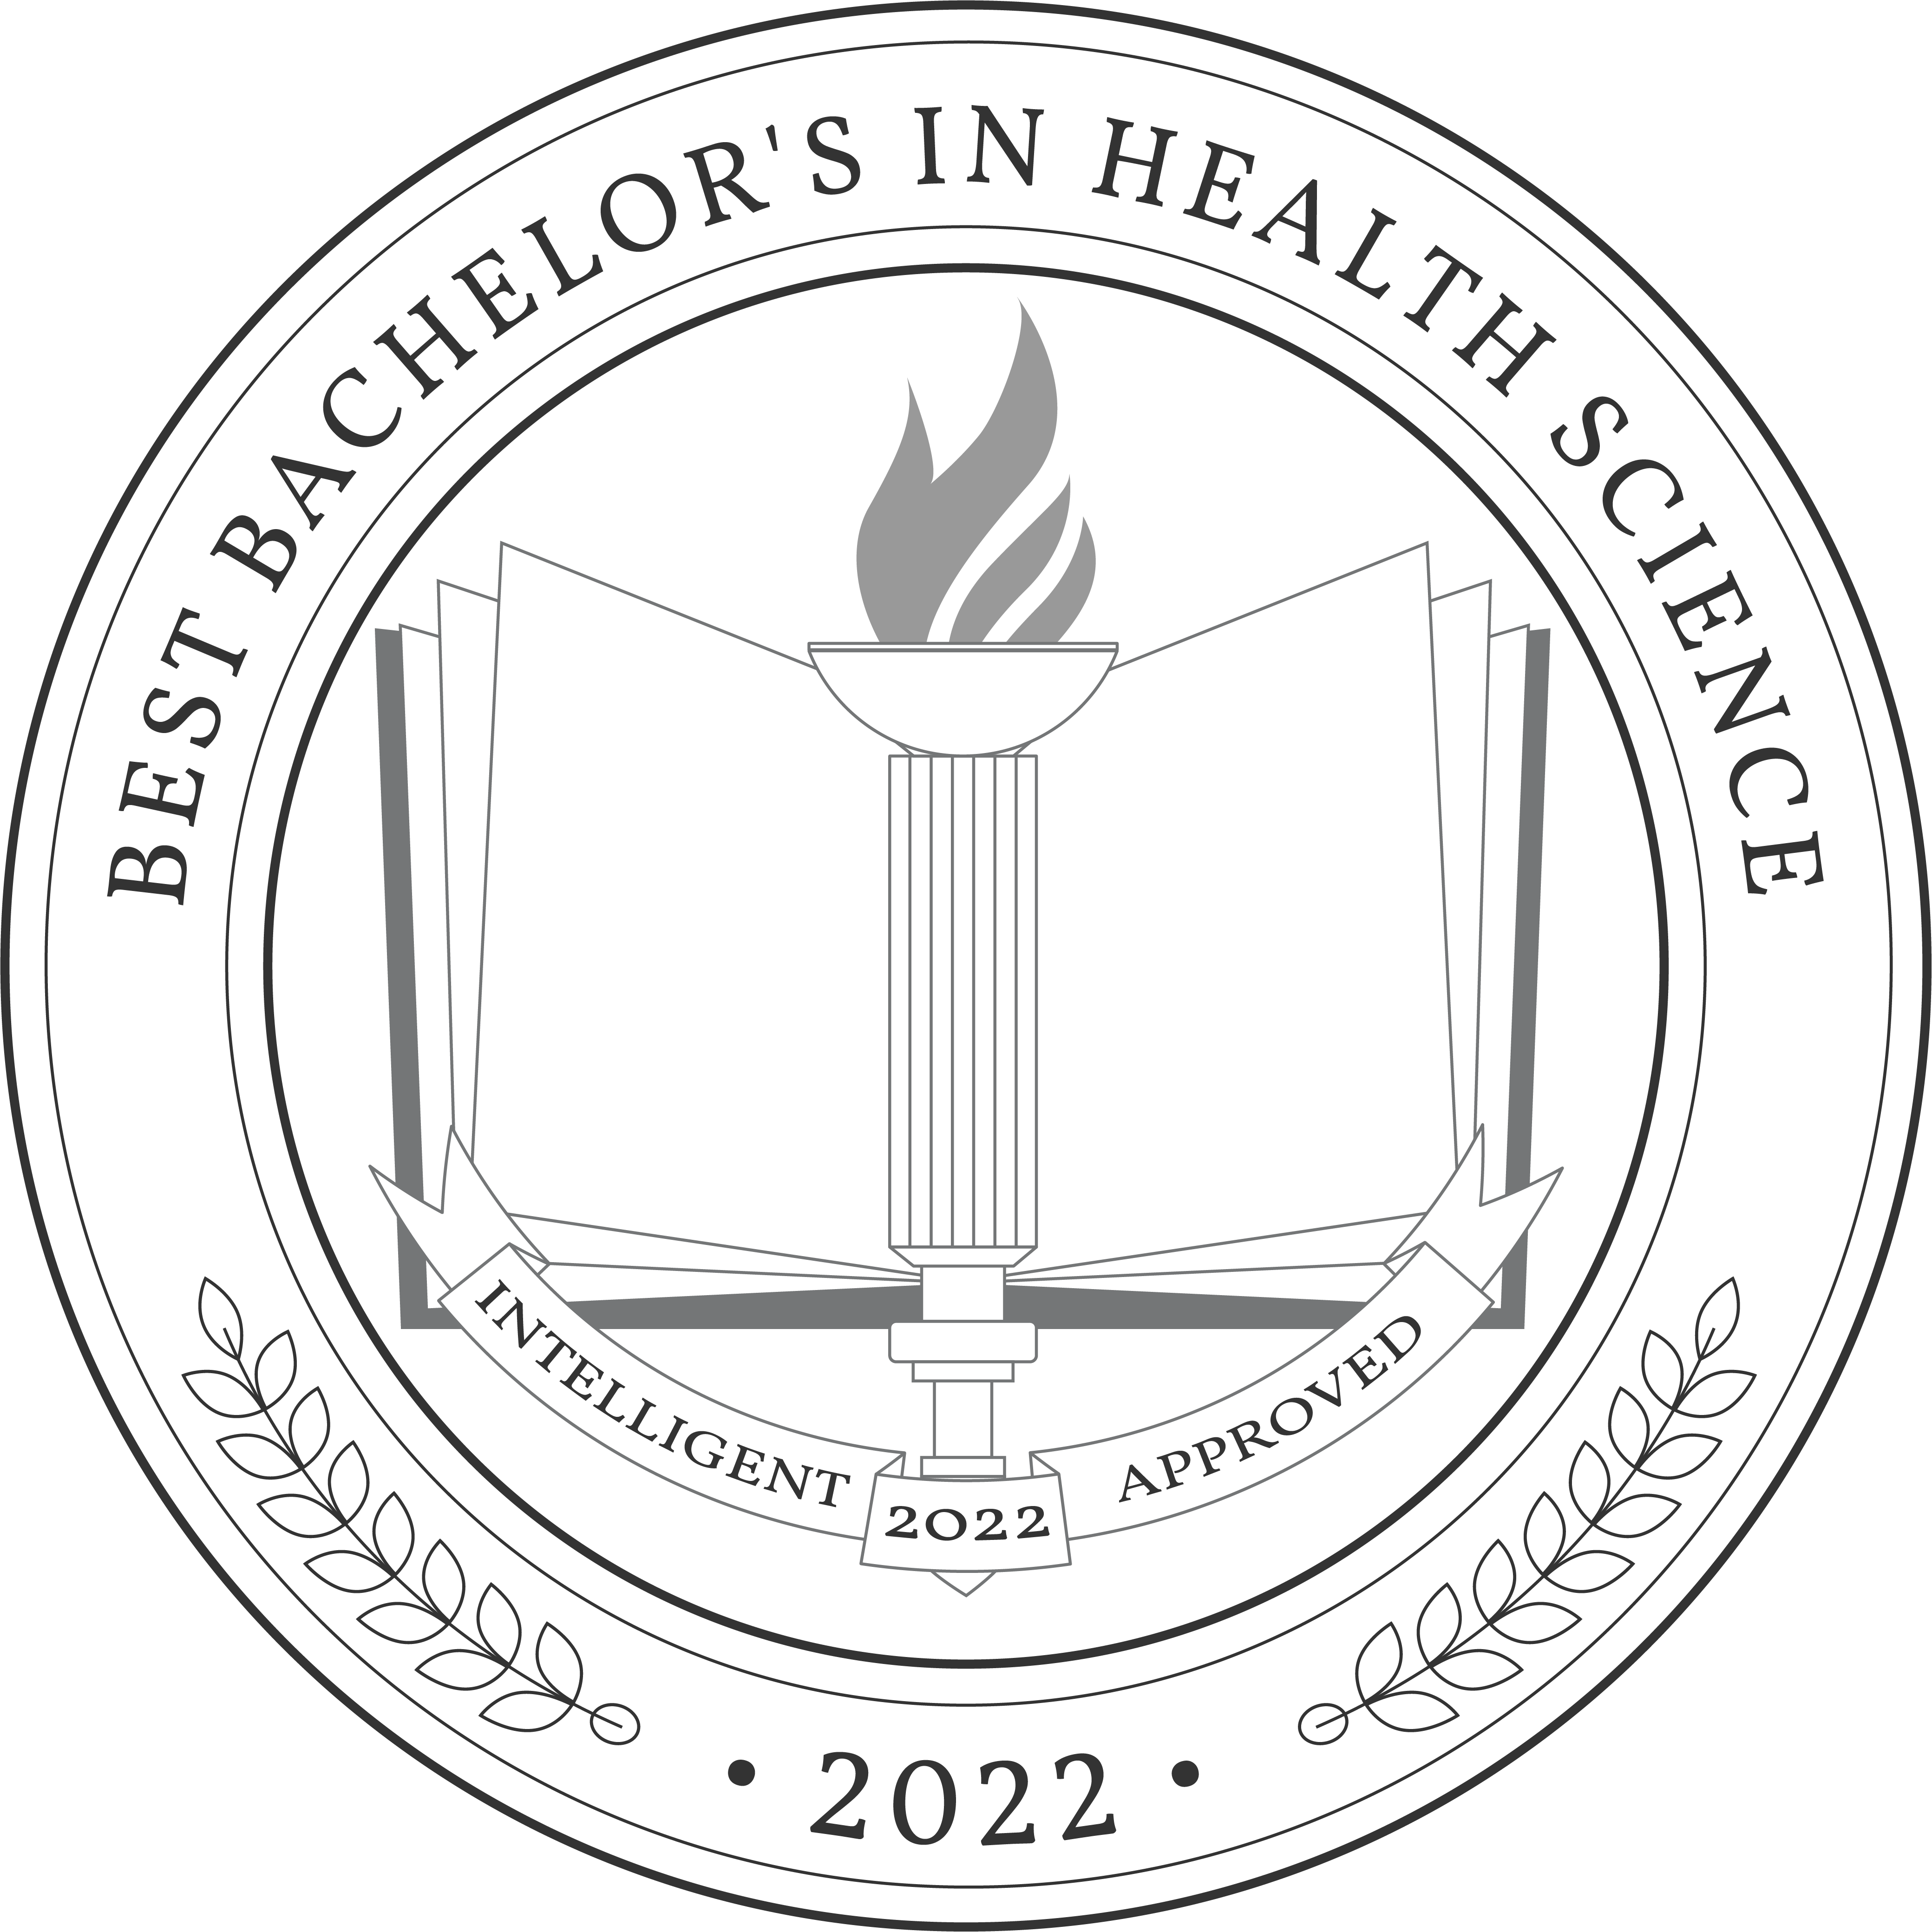 Best Bachelor's in Health Science Degree Programs